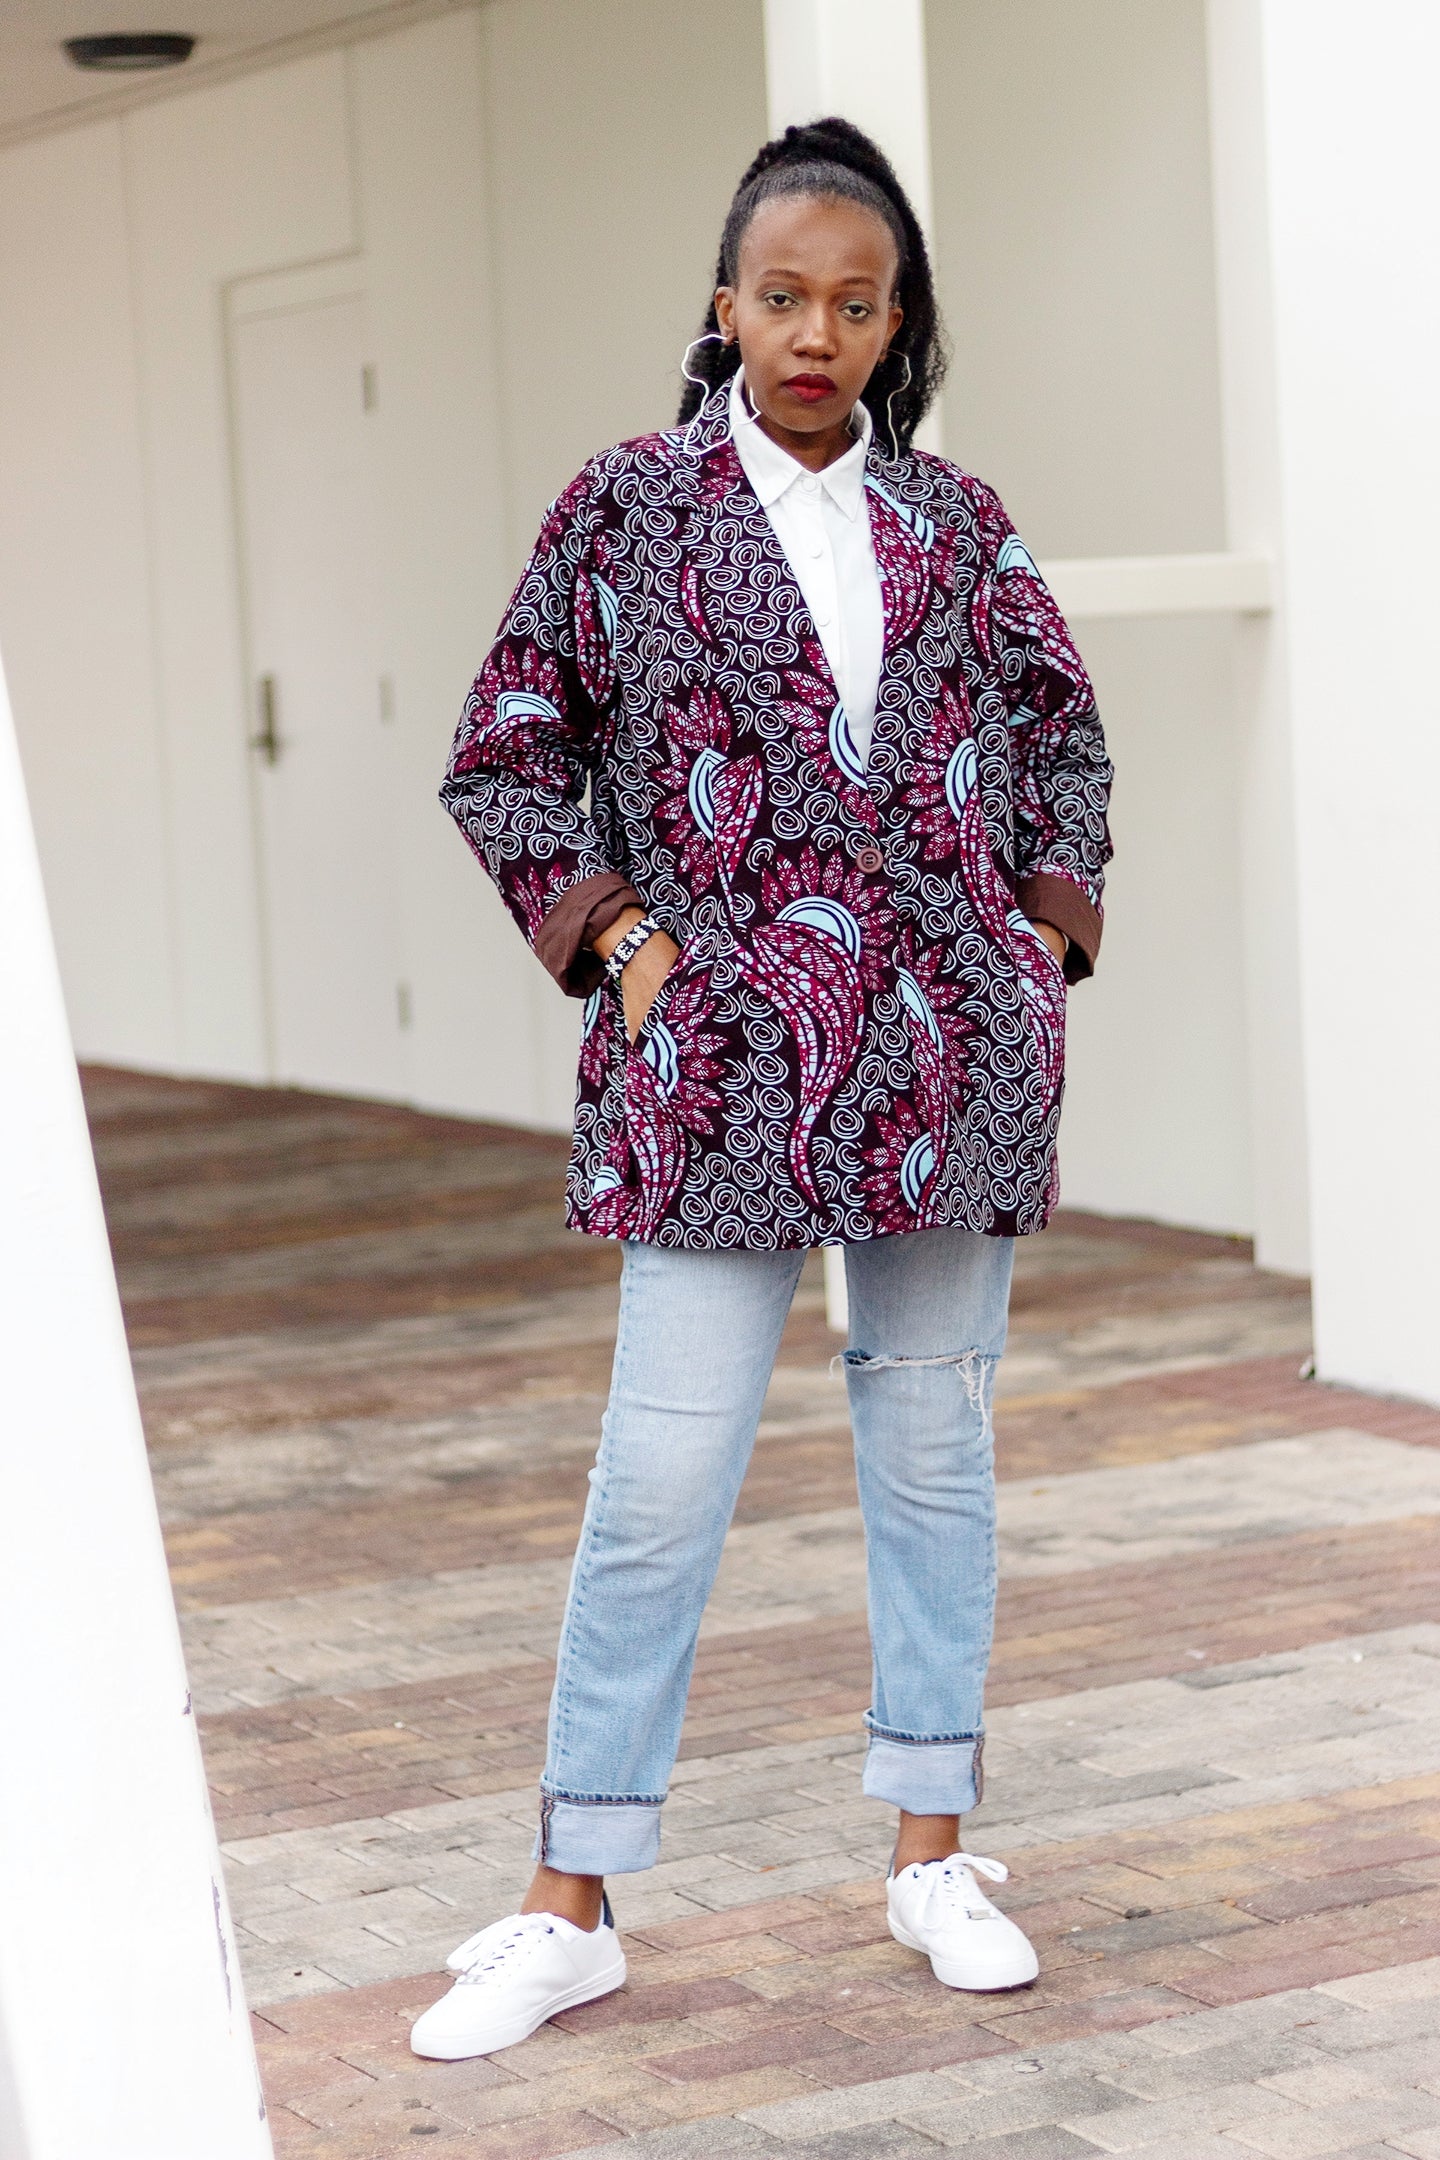 African Print/Ankara /Kitenge Women Blazer With Pockets  - Light Blue/Burgundy Floral Motif Print